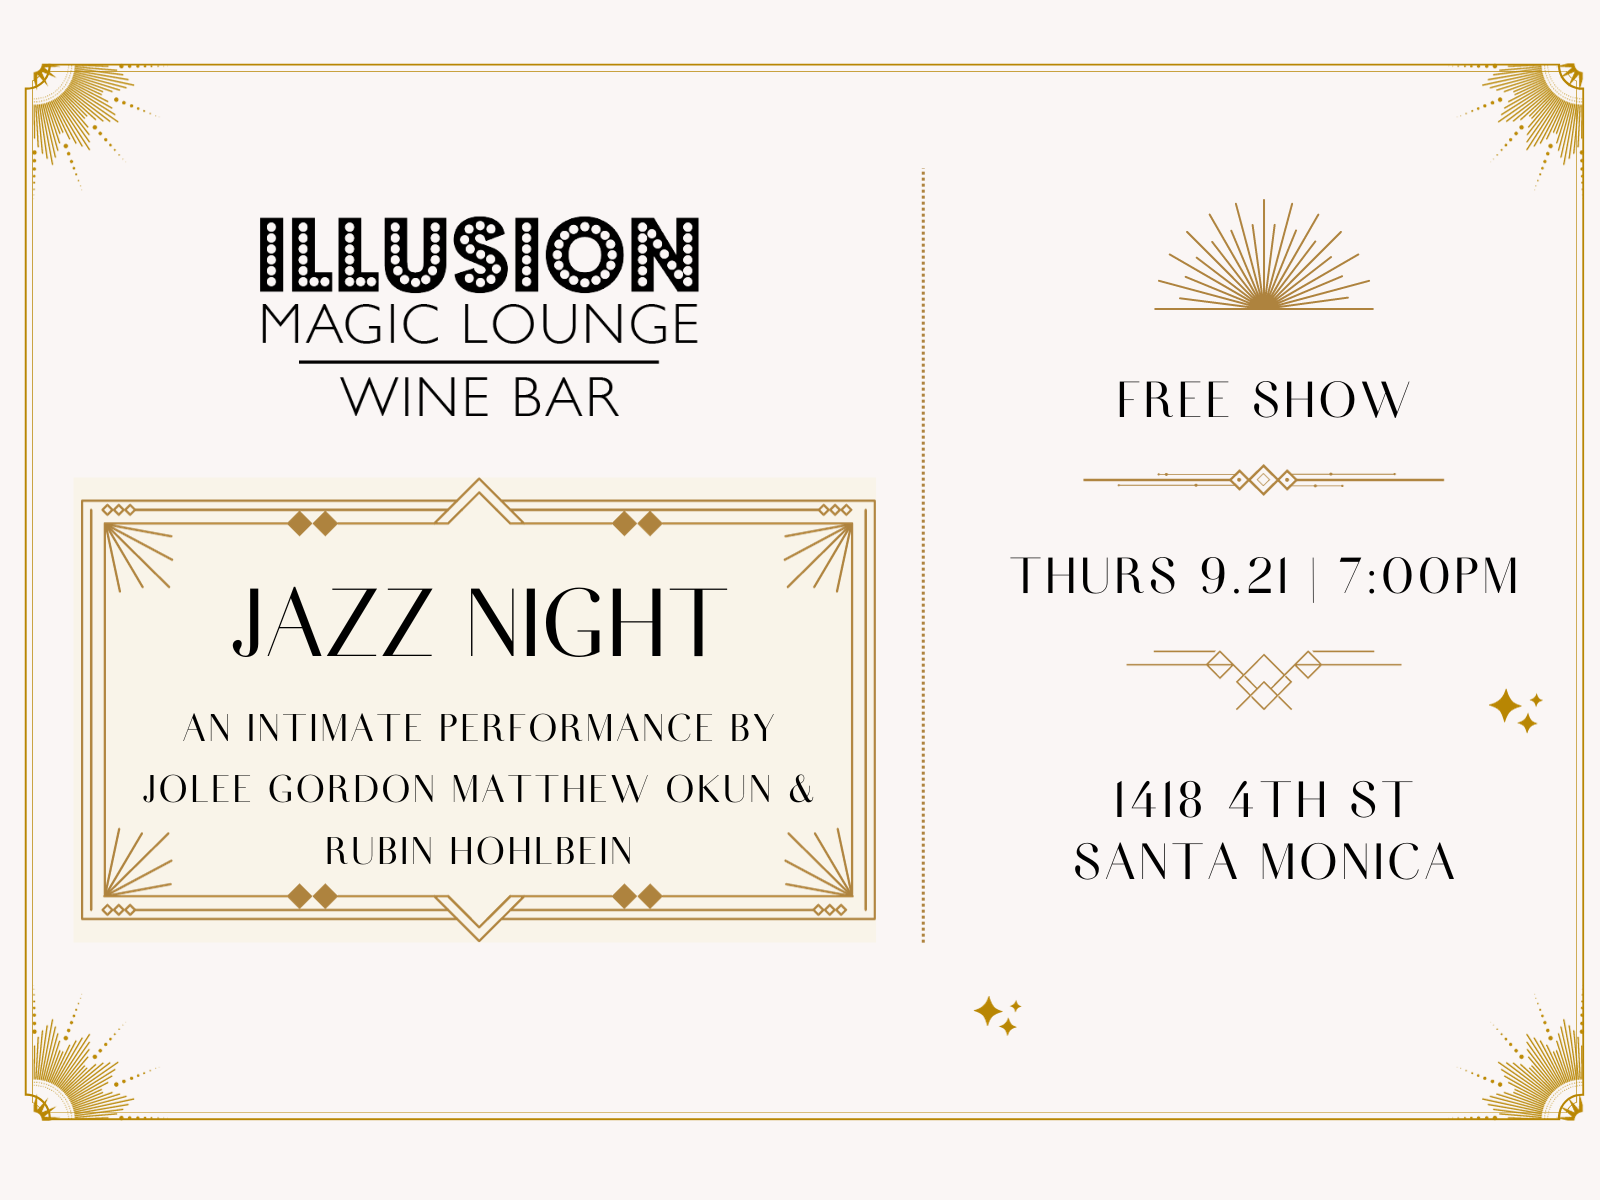 Jazz Night at Illusion Magic Lounge